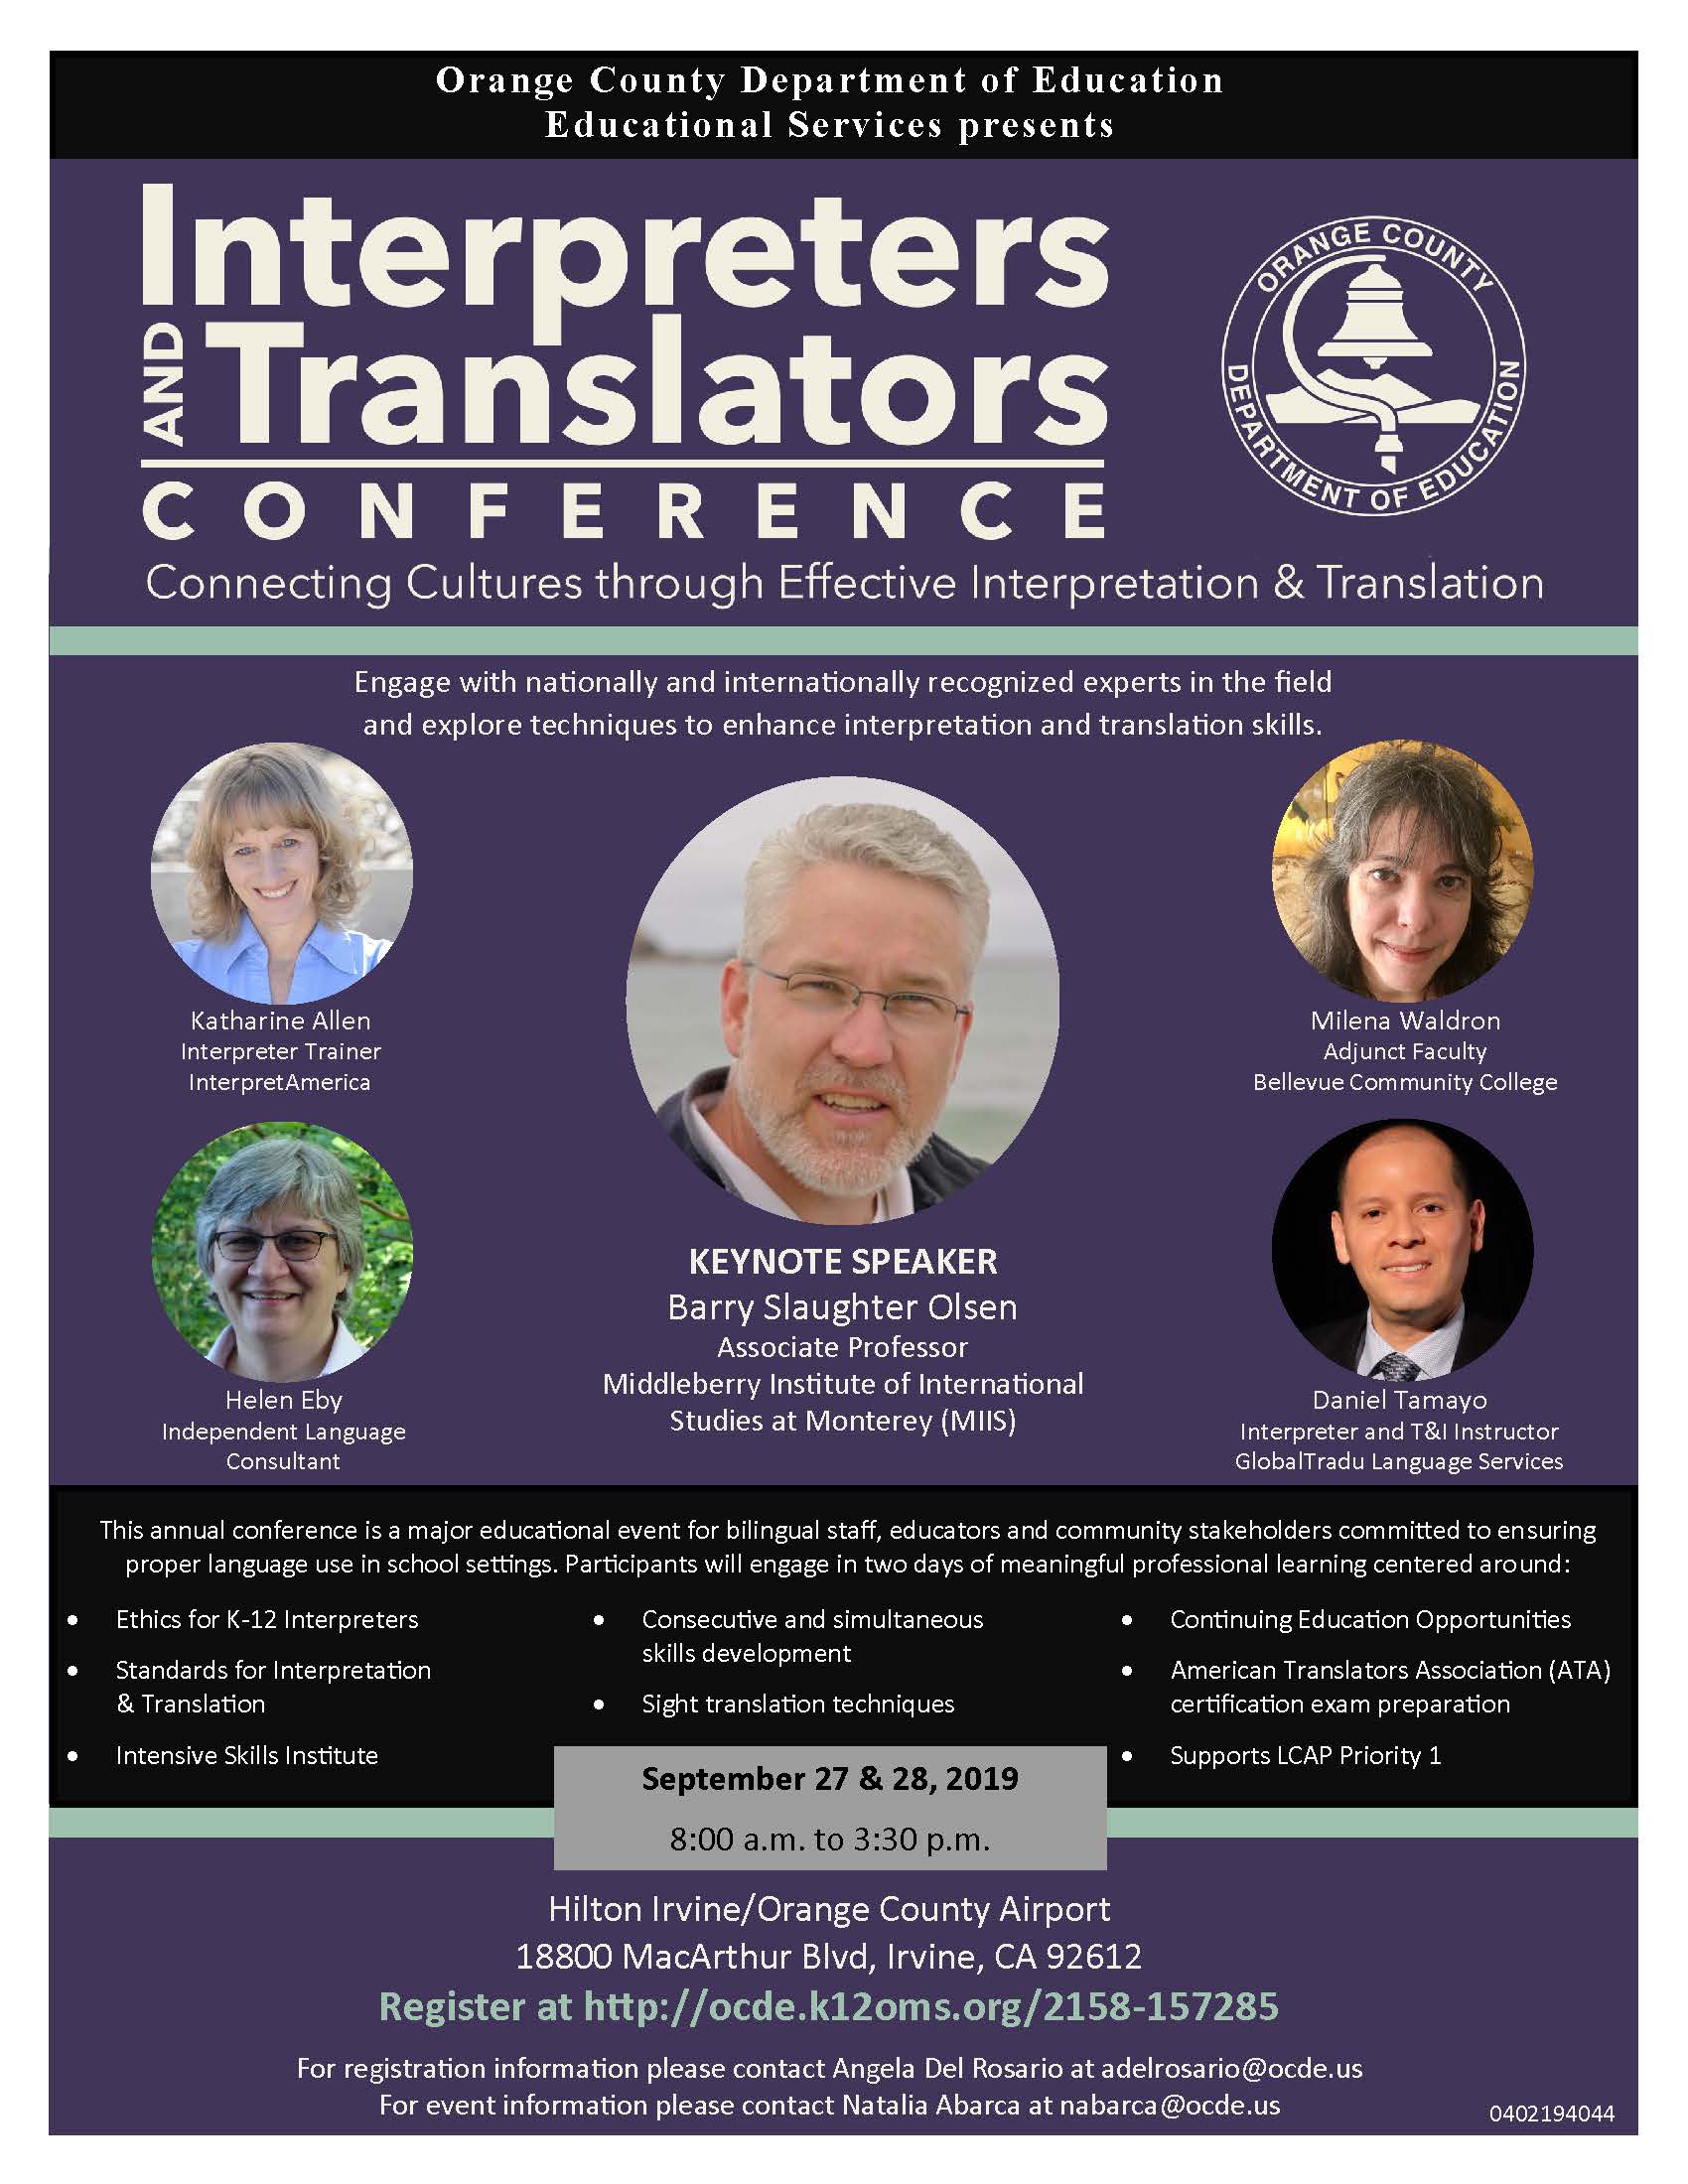 Interpreters and Translators Conference flier